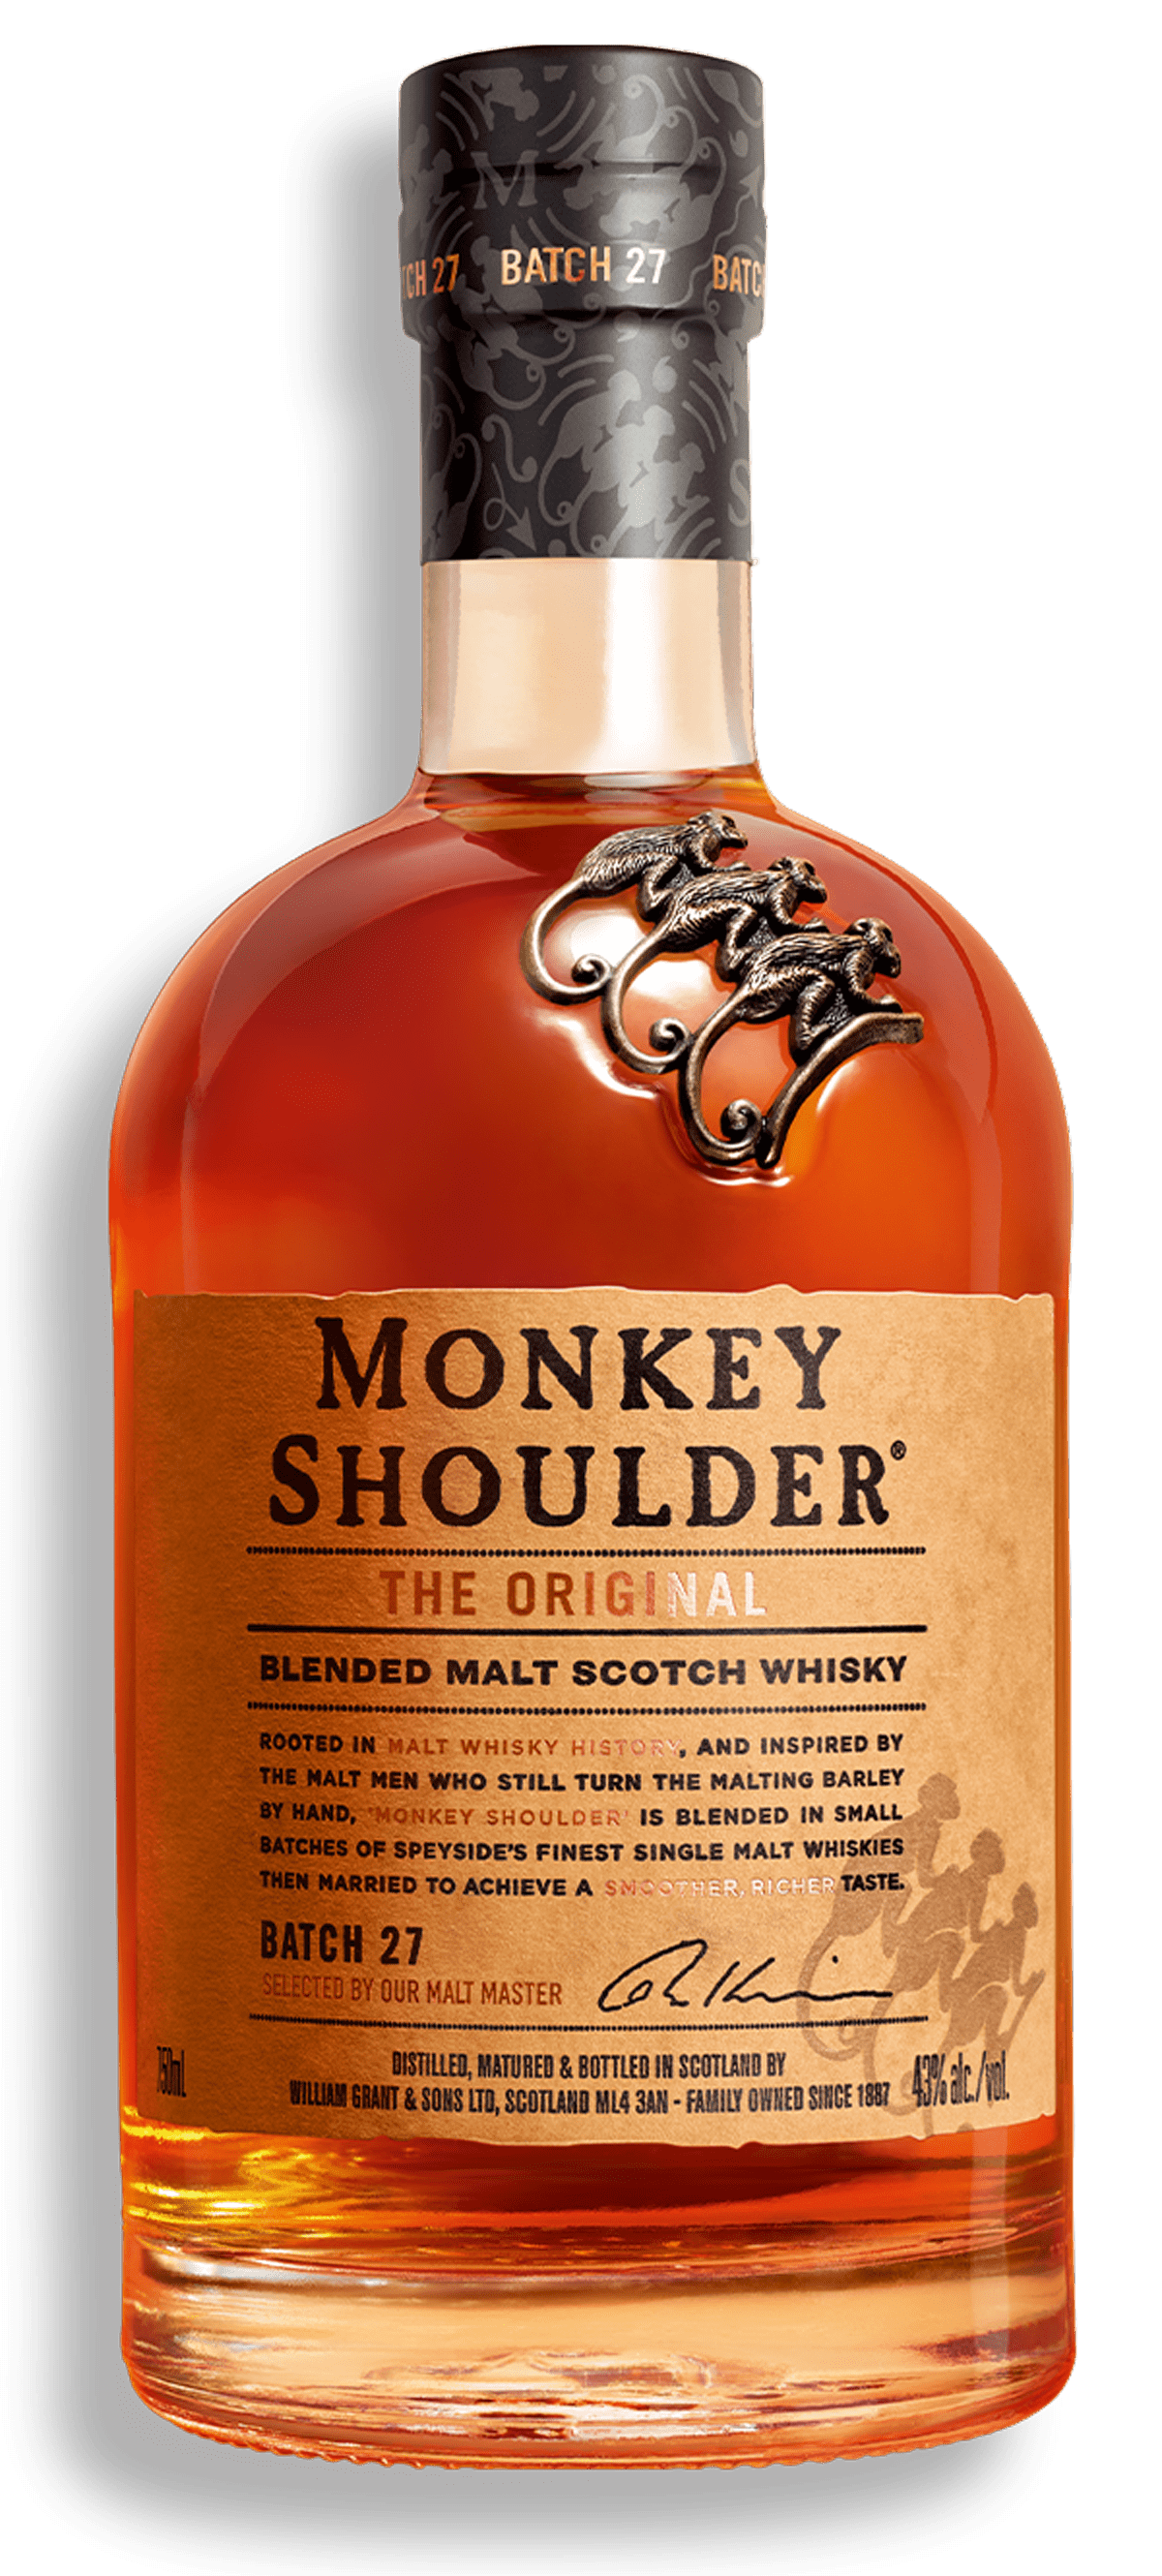 Monkey Shoulder - Wikipedia